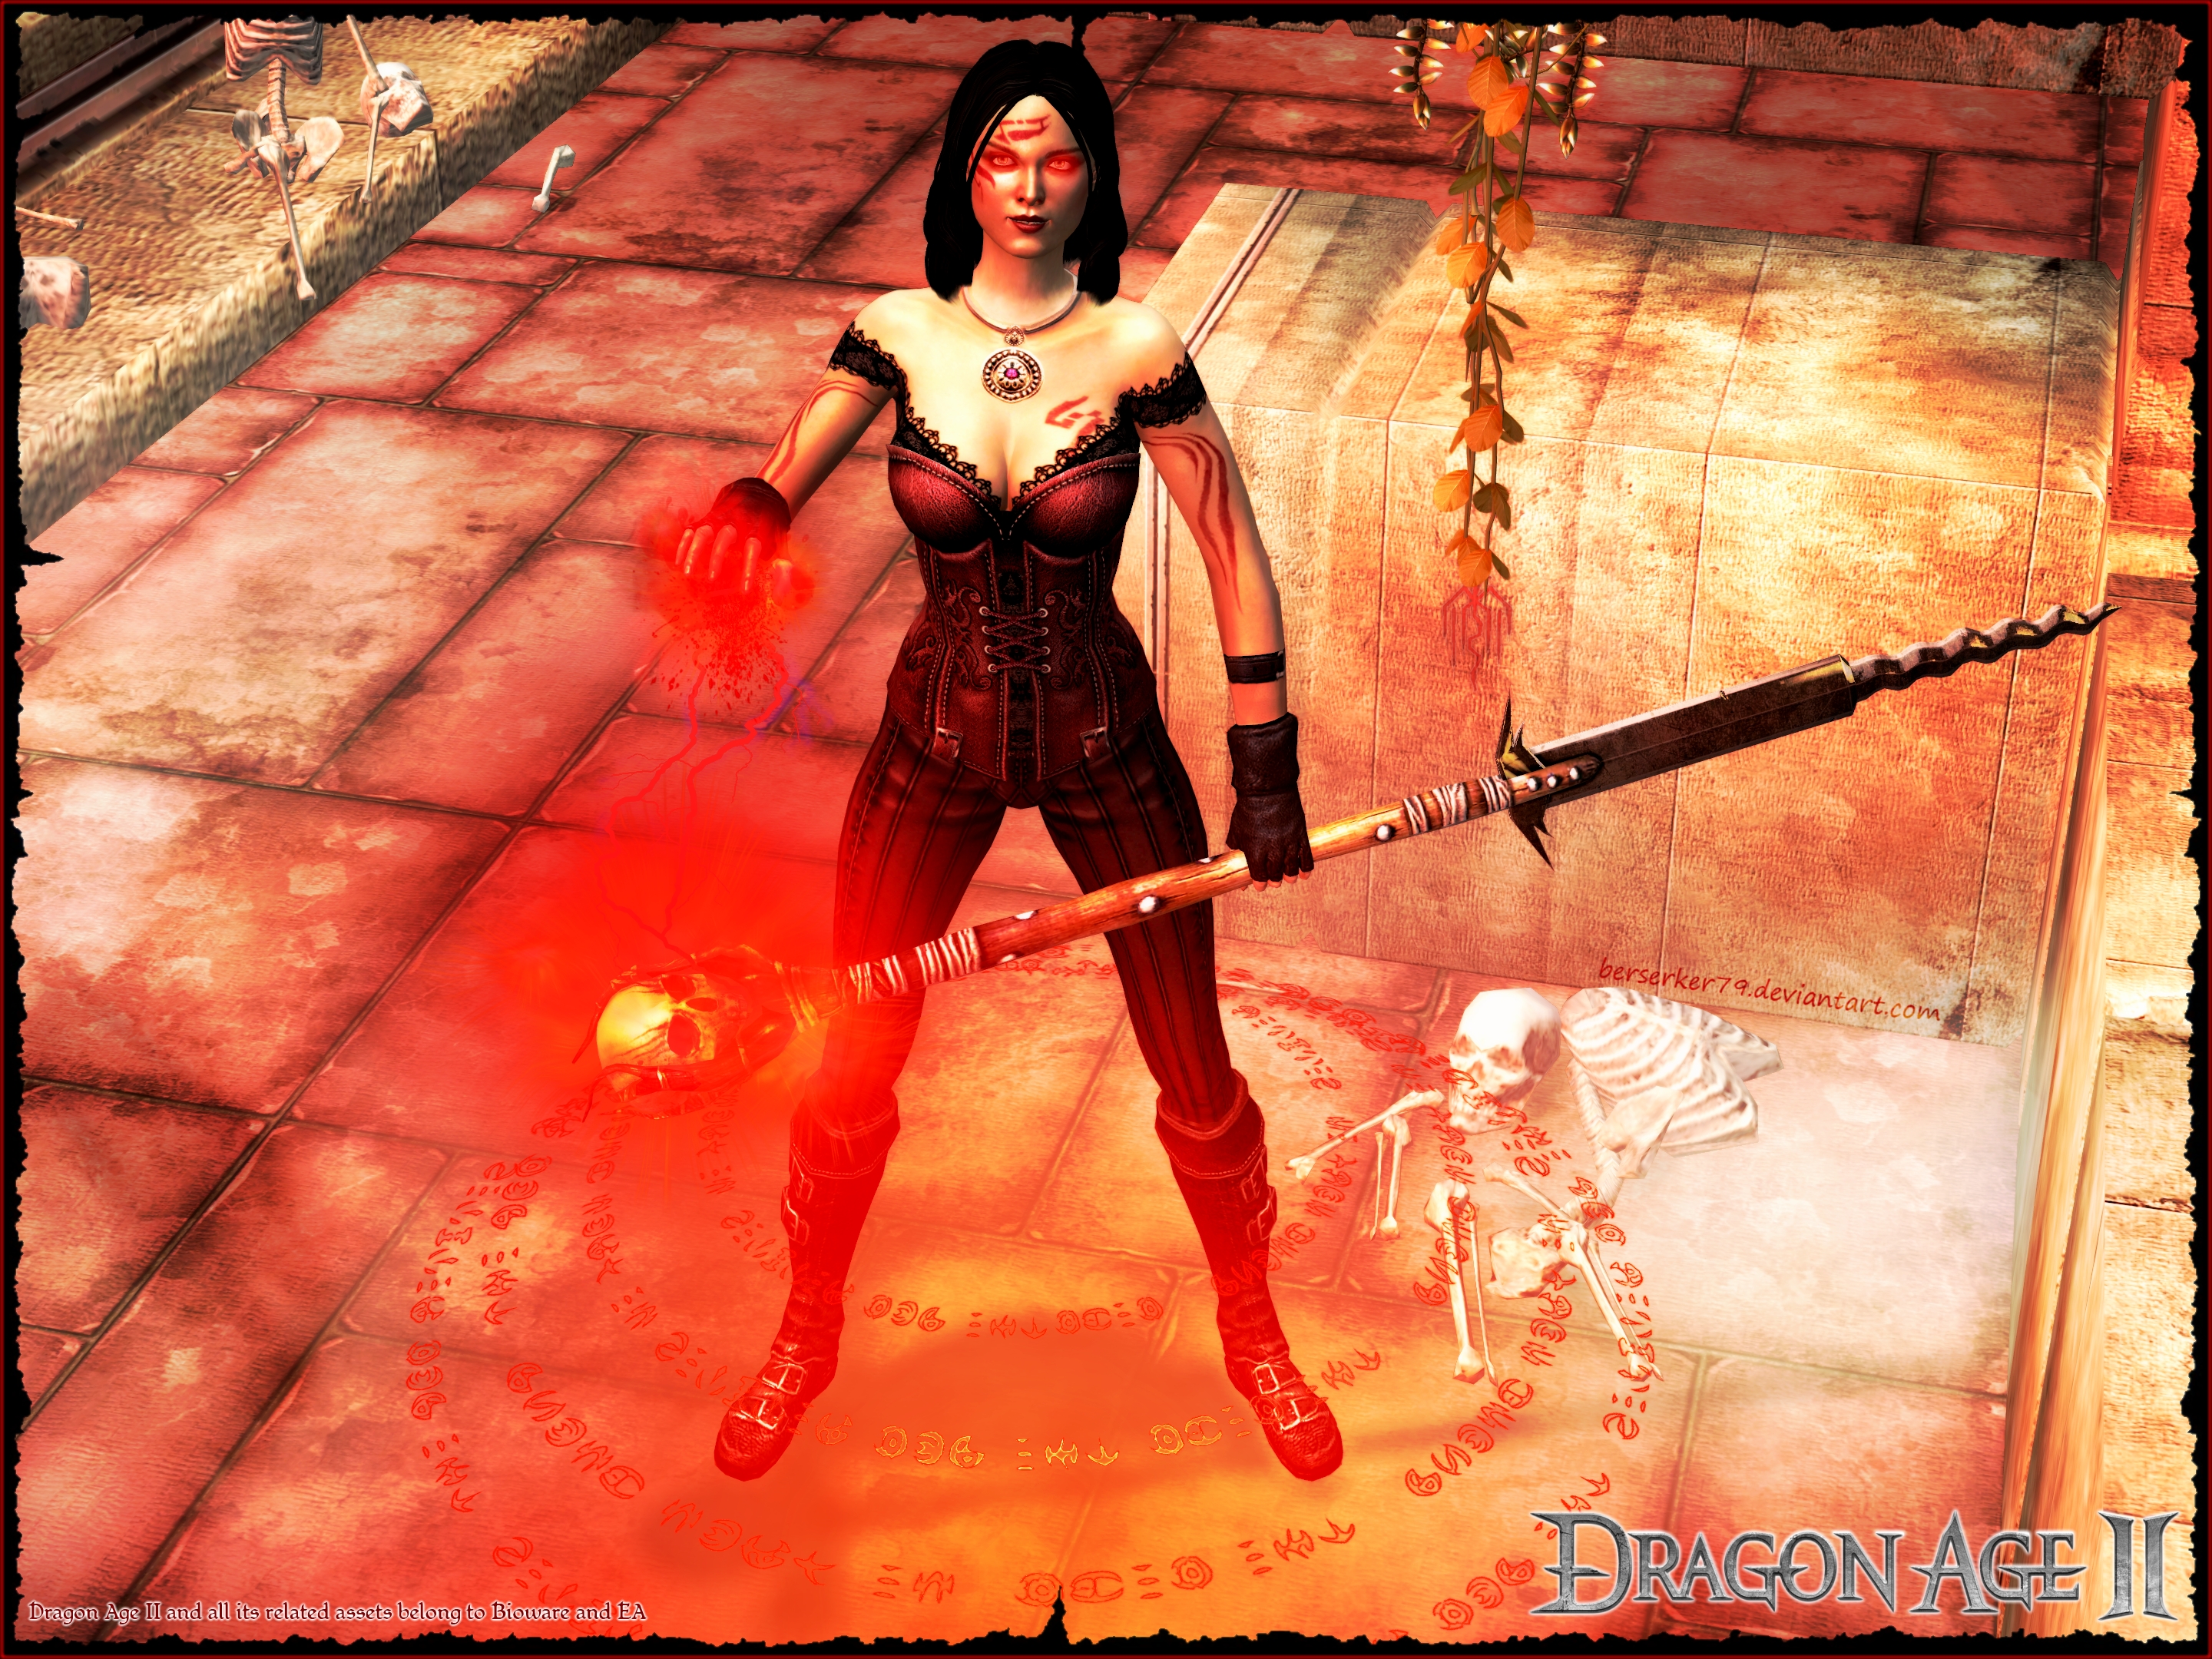 Dragon Age: Awakening by Maiqueti on DeviantArt